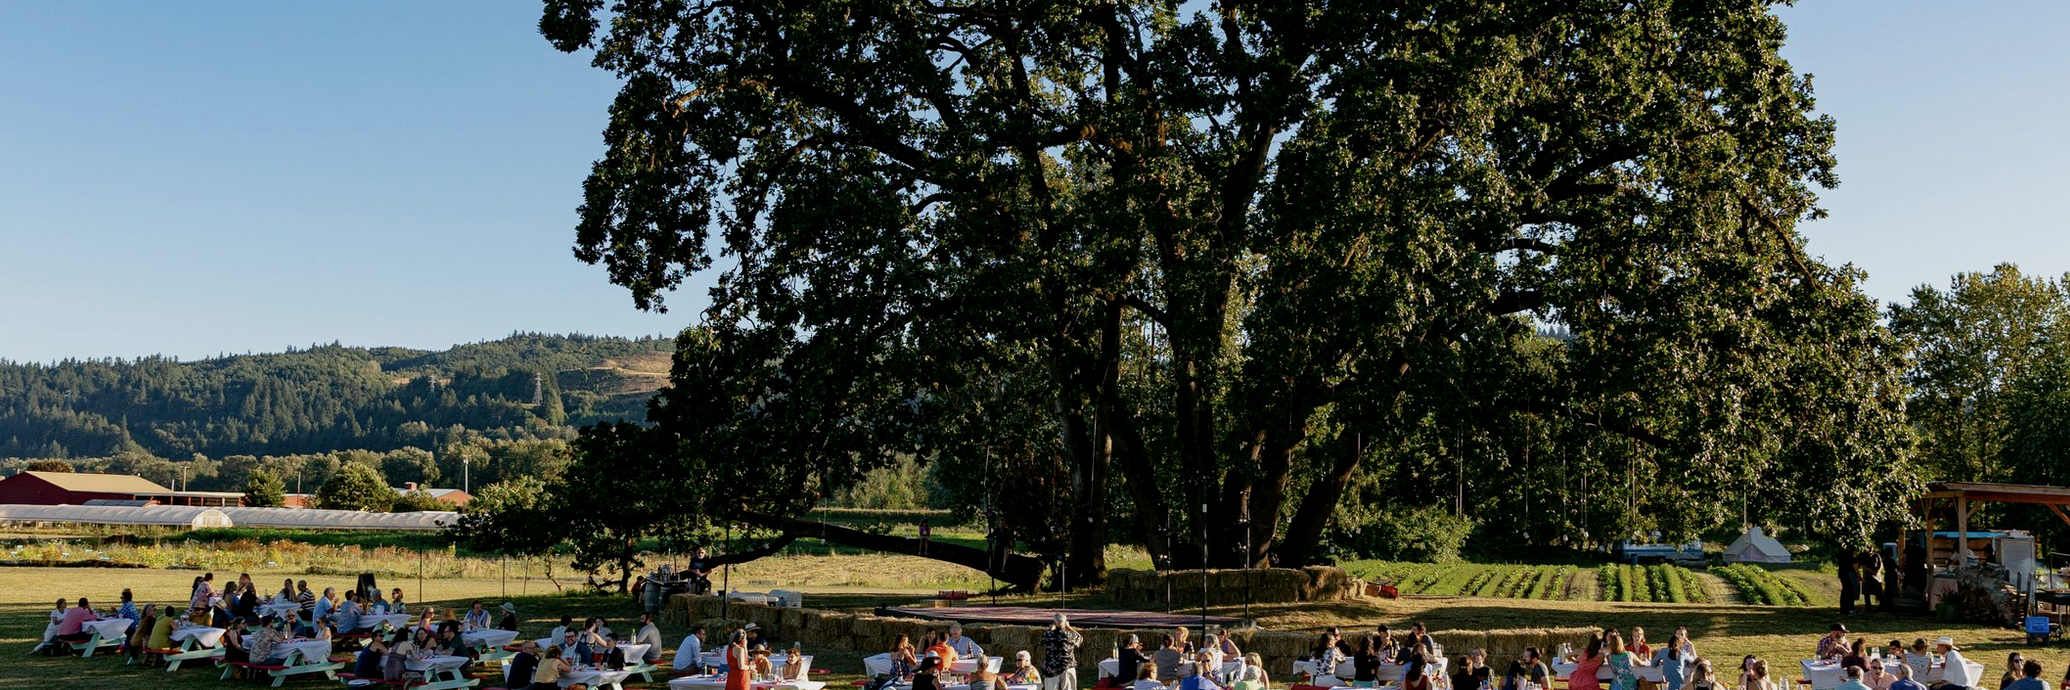 Topaz Farm 2 – Farm to Table diners under their historic oak tree